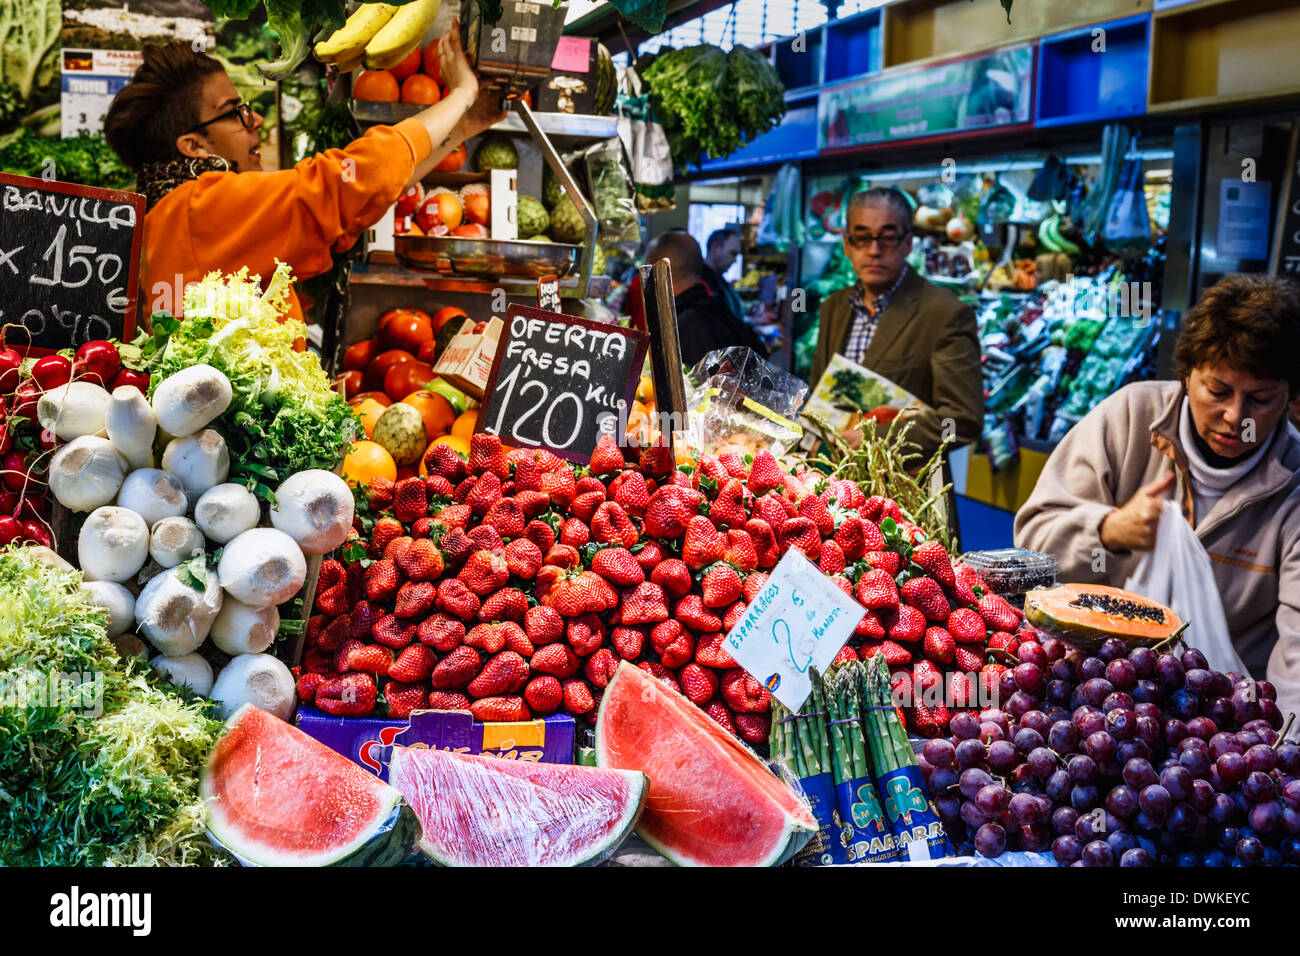 Fruit and vegetable stall in the indoor market (Mercado de Atarazanas), Malaga, Costa del Sol, Andalusia, Spain. Stock Photo